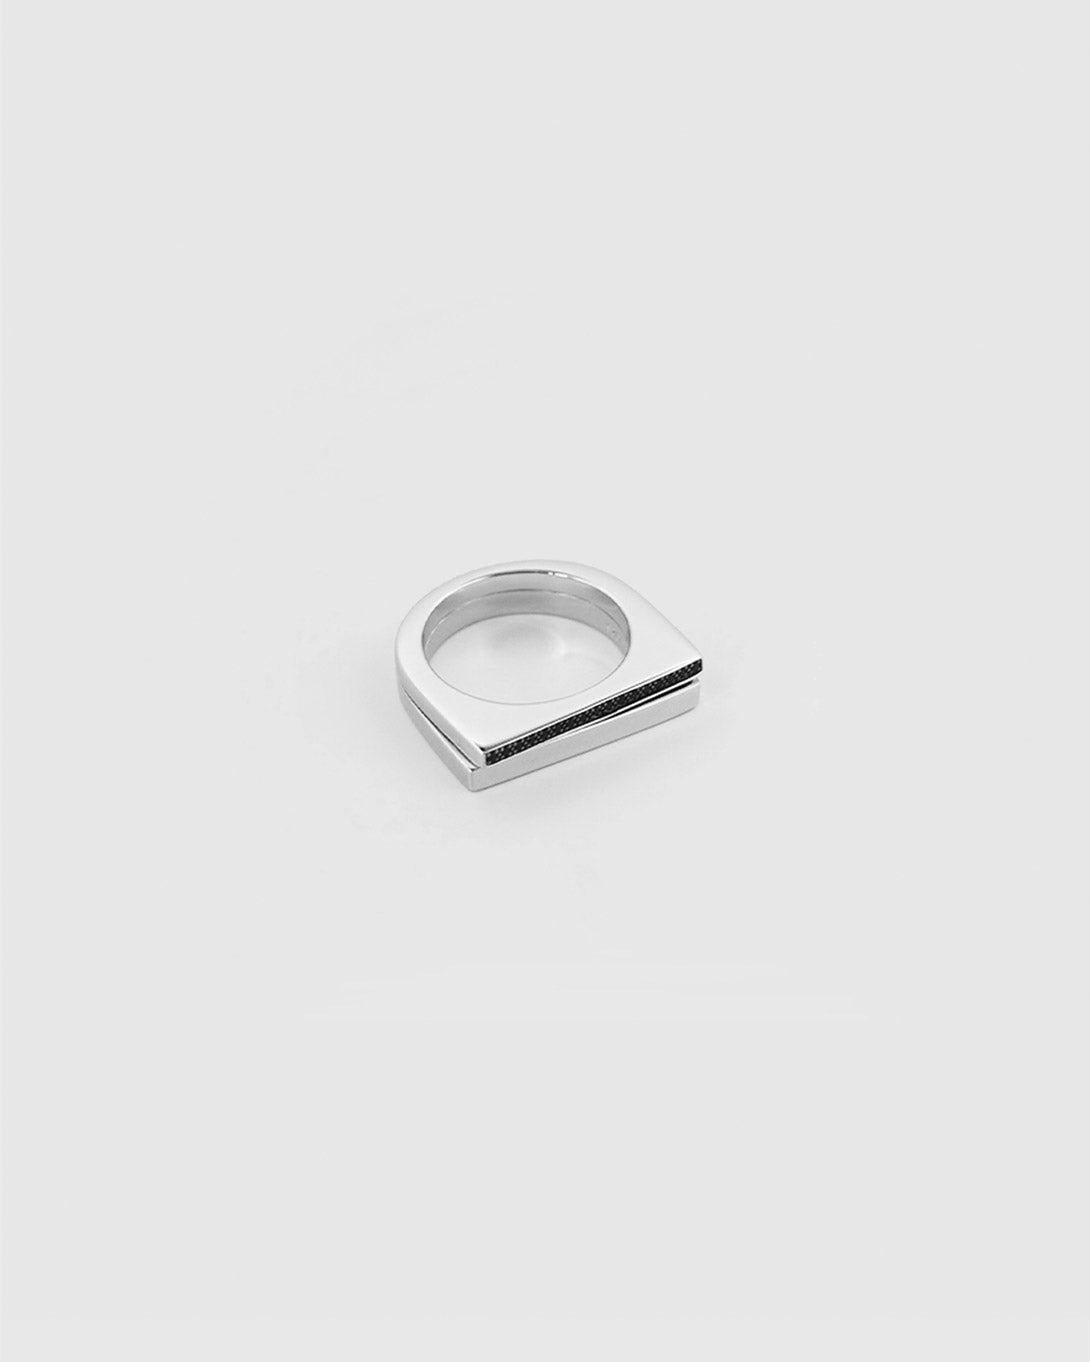 Step Ring Black Spinel - Jewelry - Tom Wood - Elevastor